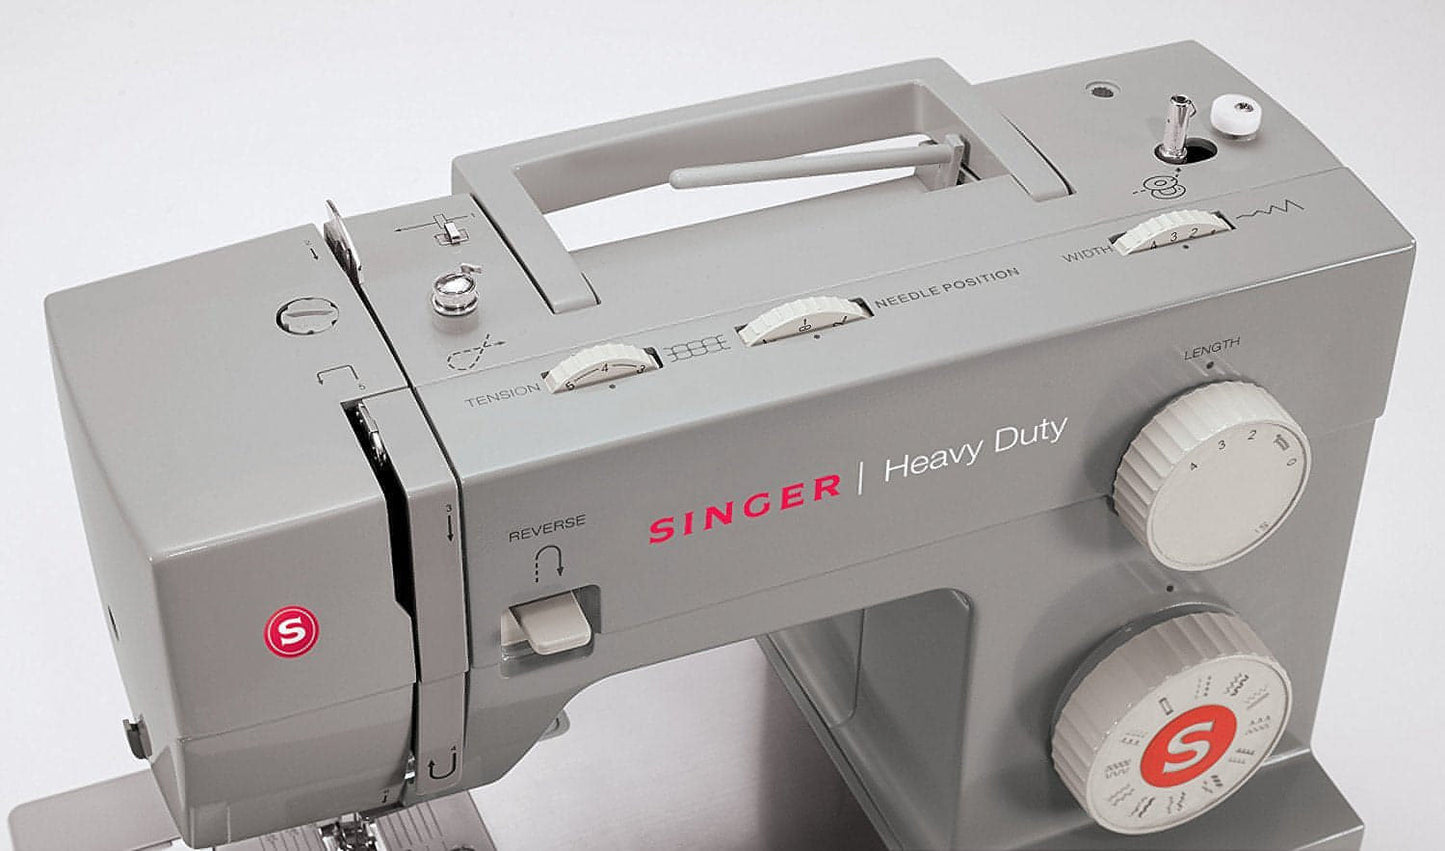 Singer Heavy Duty 4423 Sewing Machine - Ex Display